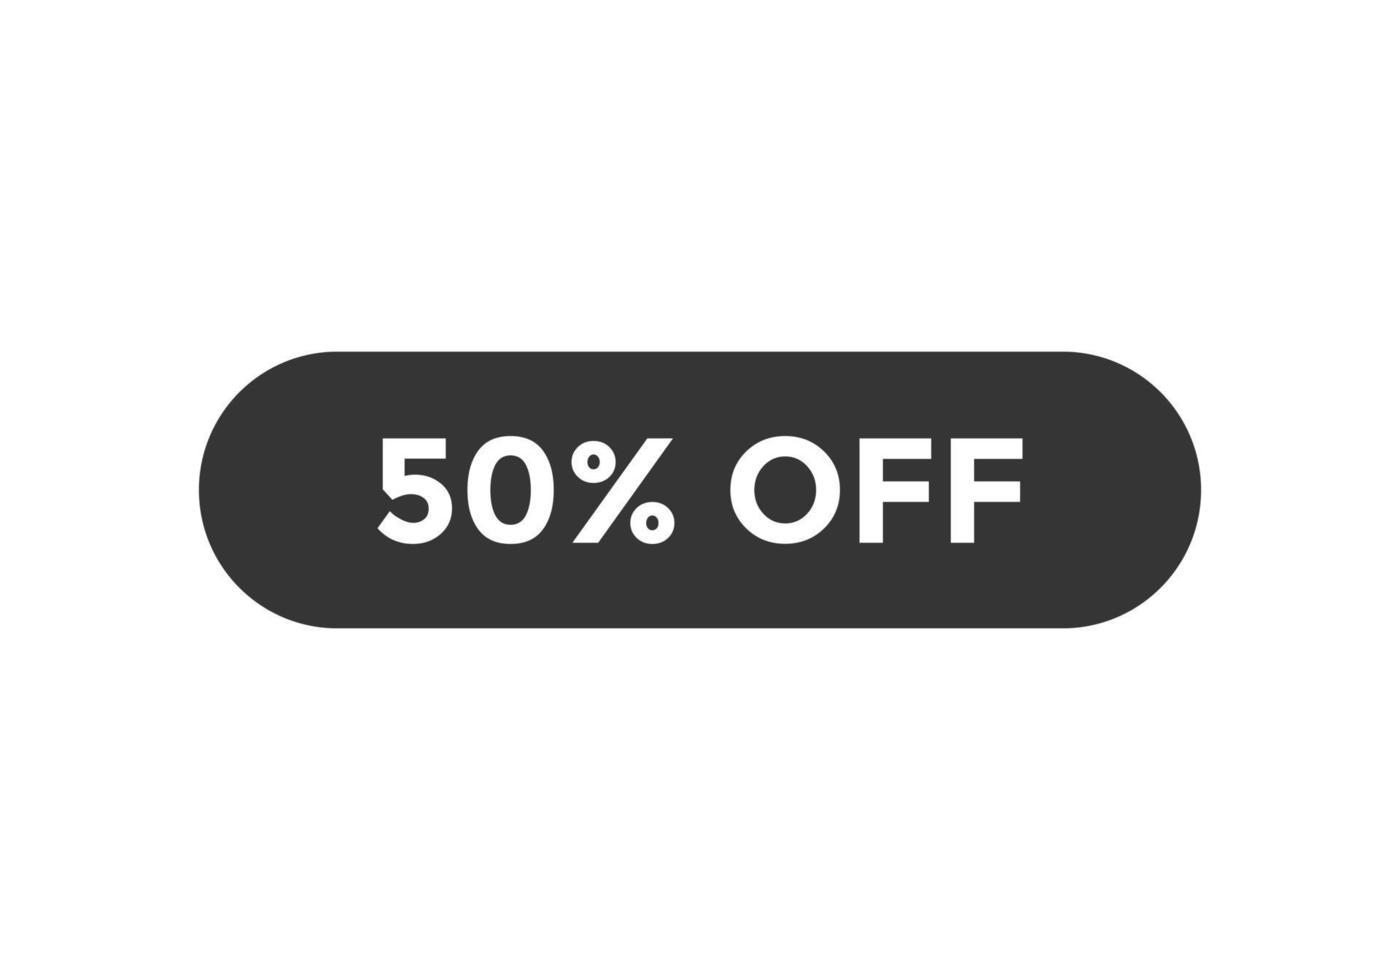 50 percent off text label icon sale discount 50 percent off icon vector